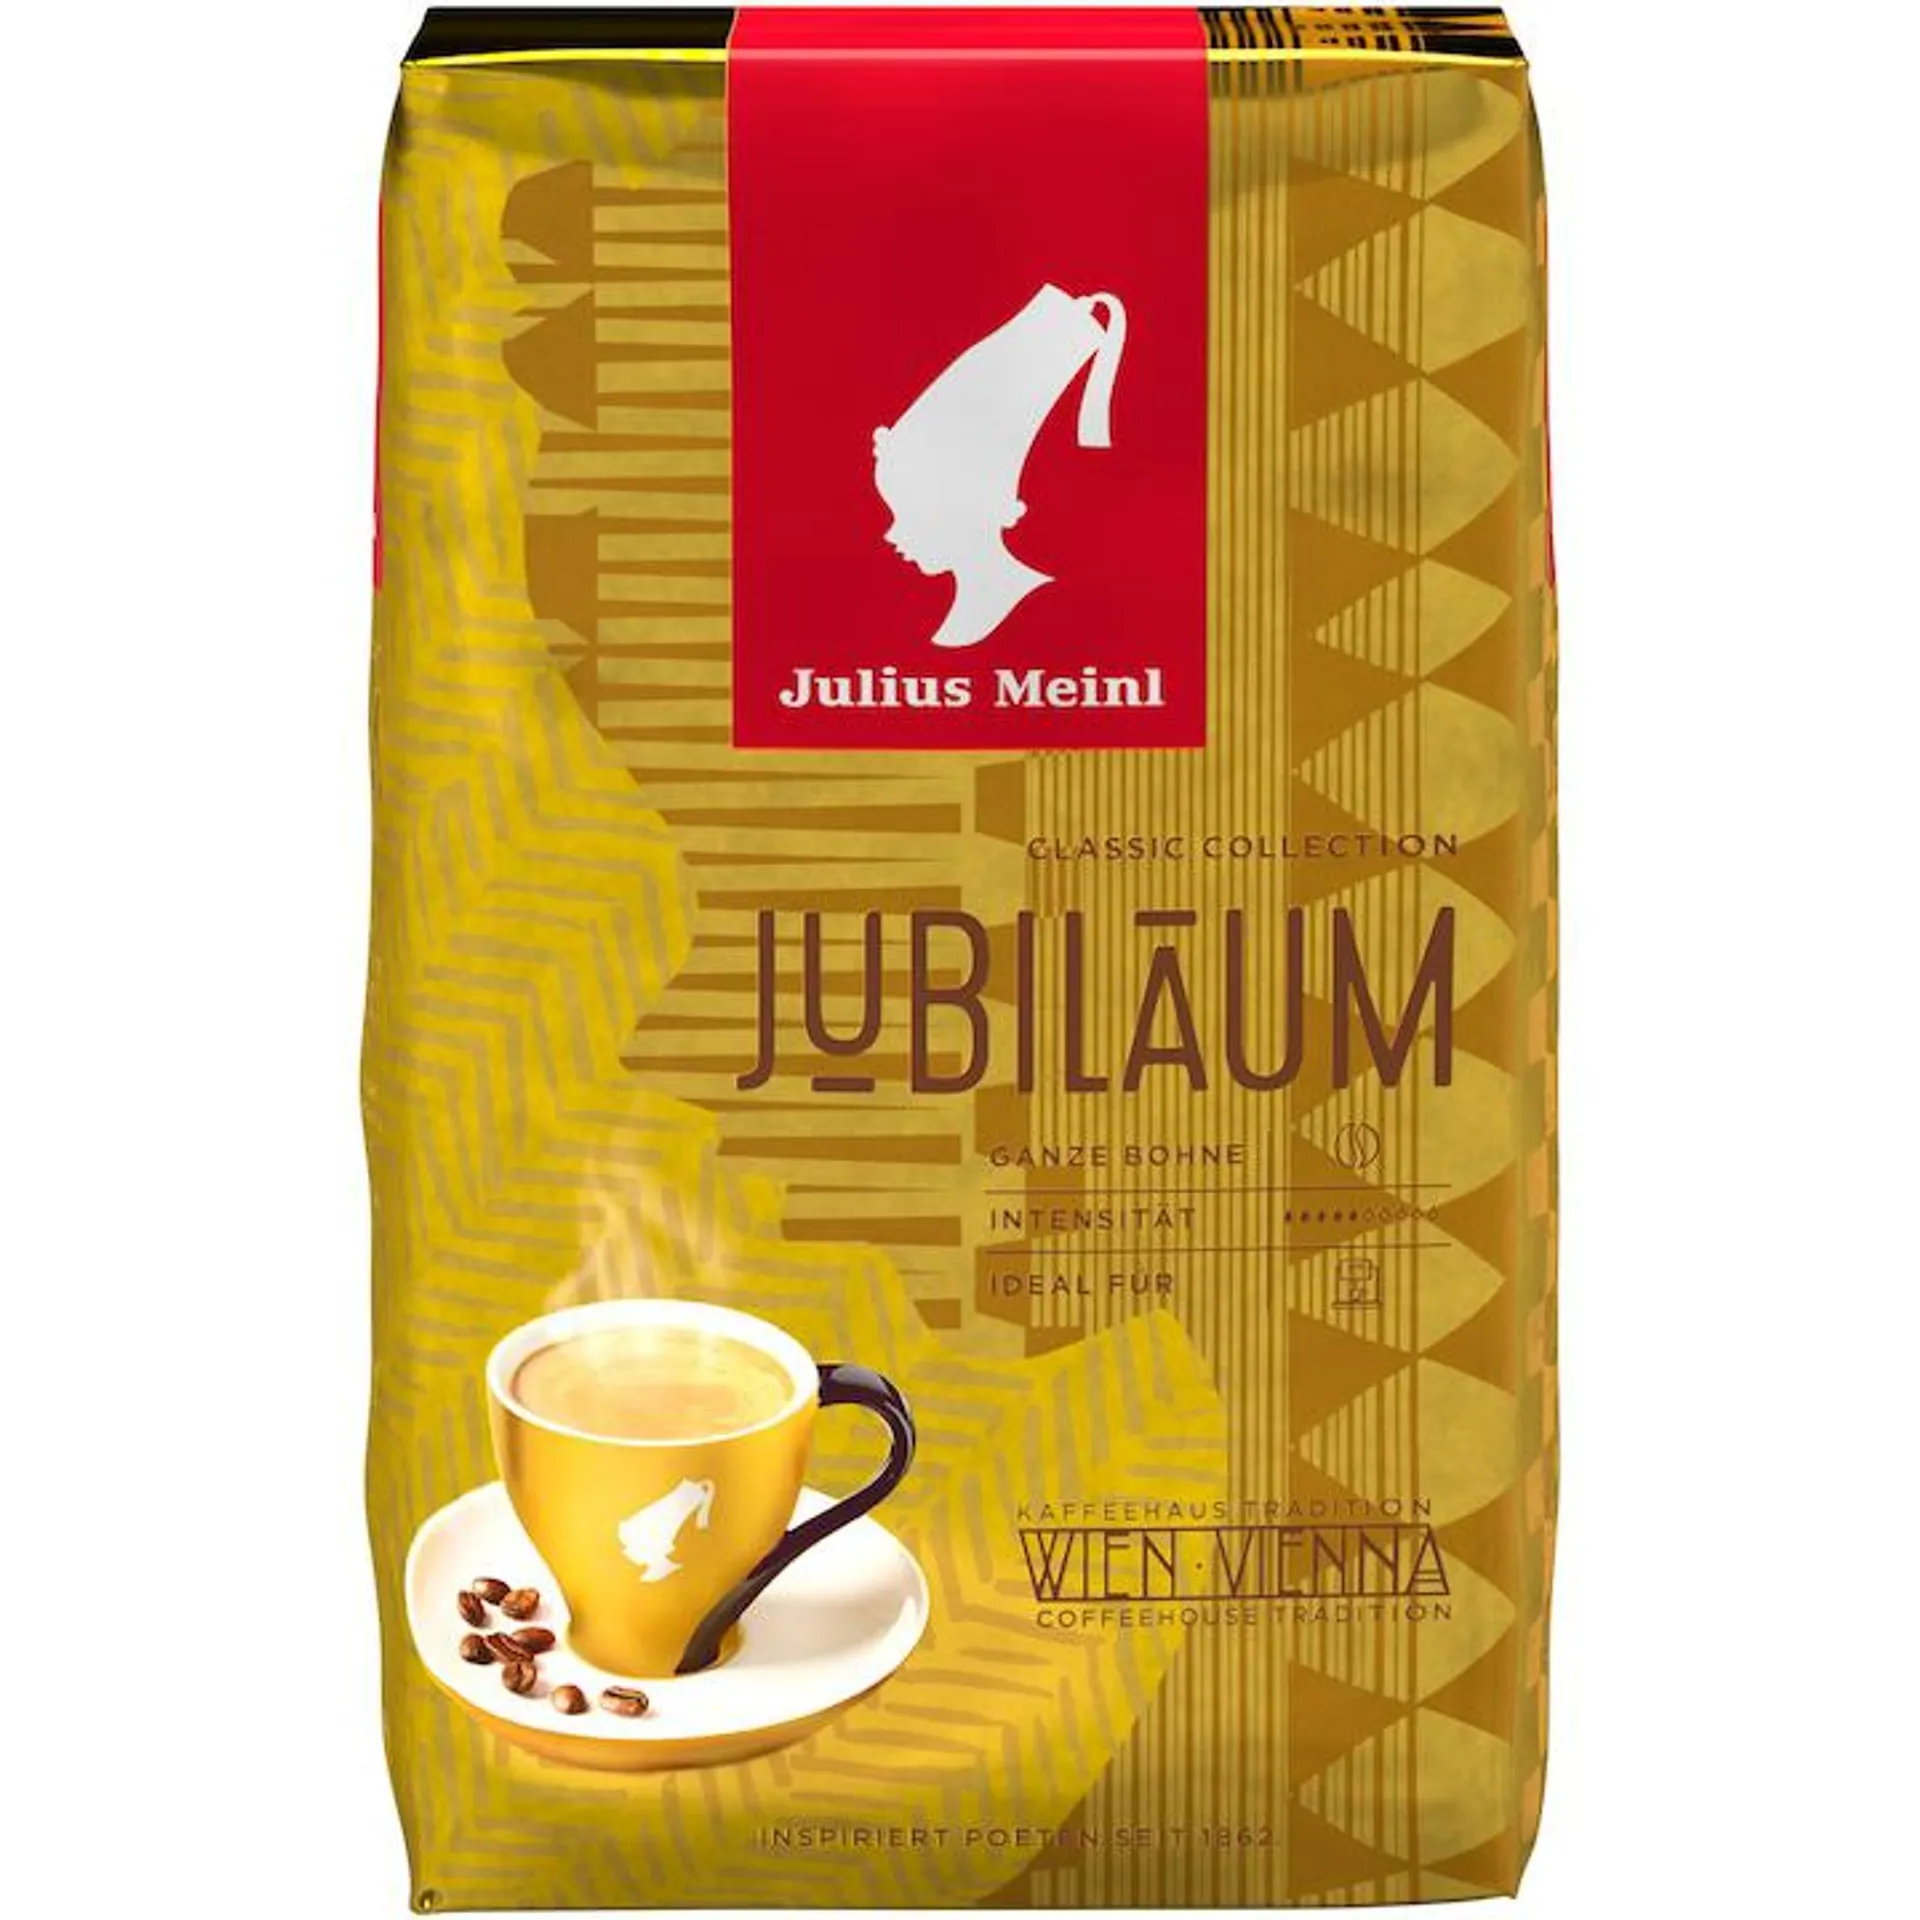 Cafea boabe Julius Meinl Jubilaum, 500 gr.